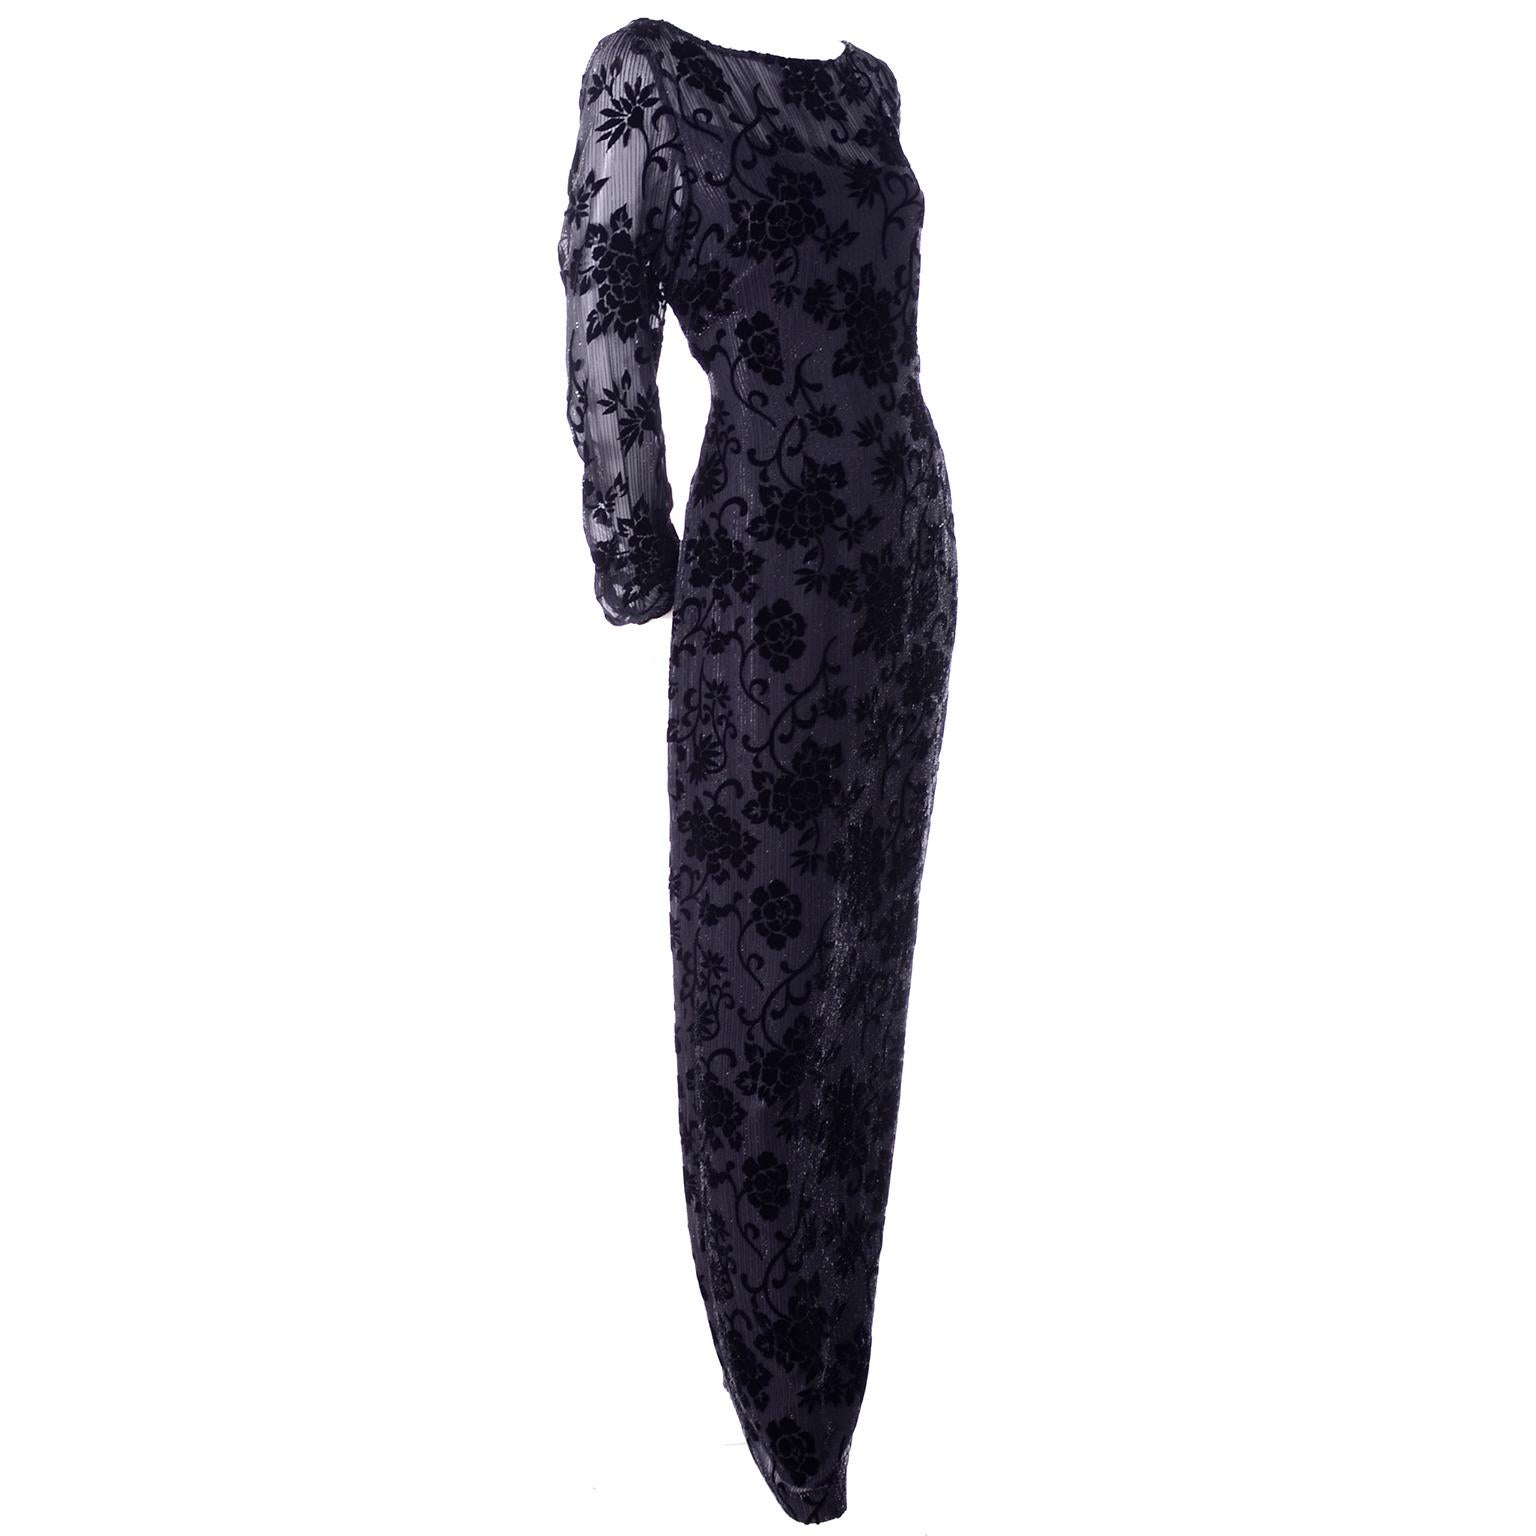 Bloomingdales Vintage 1980s Burn Out Black Velvet Dress With Metallic Threads For Sale 2